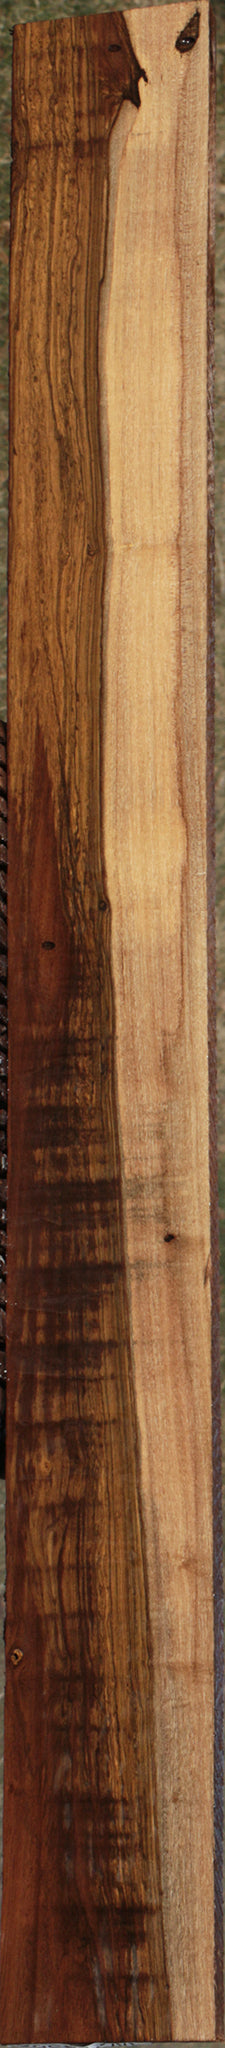 Extra Fancy Louro Preto Lumber